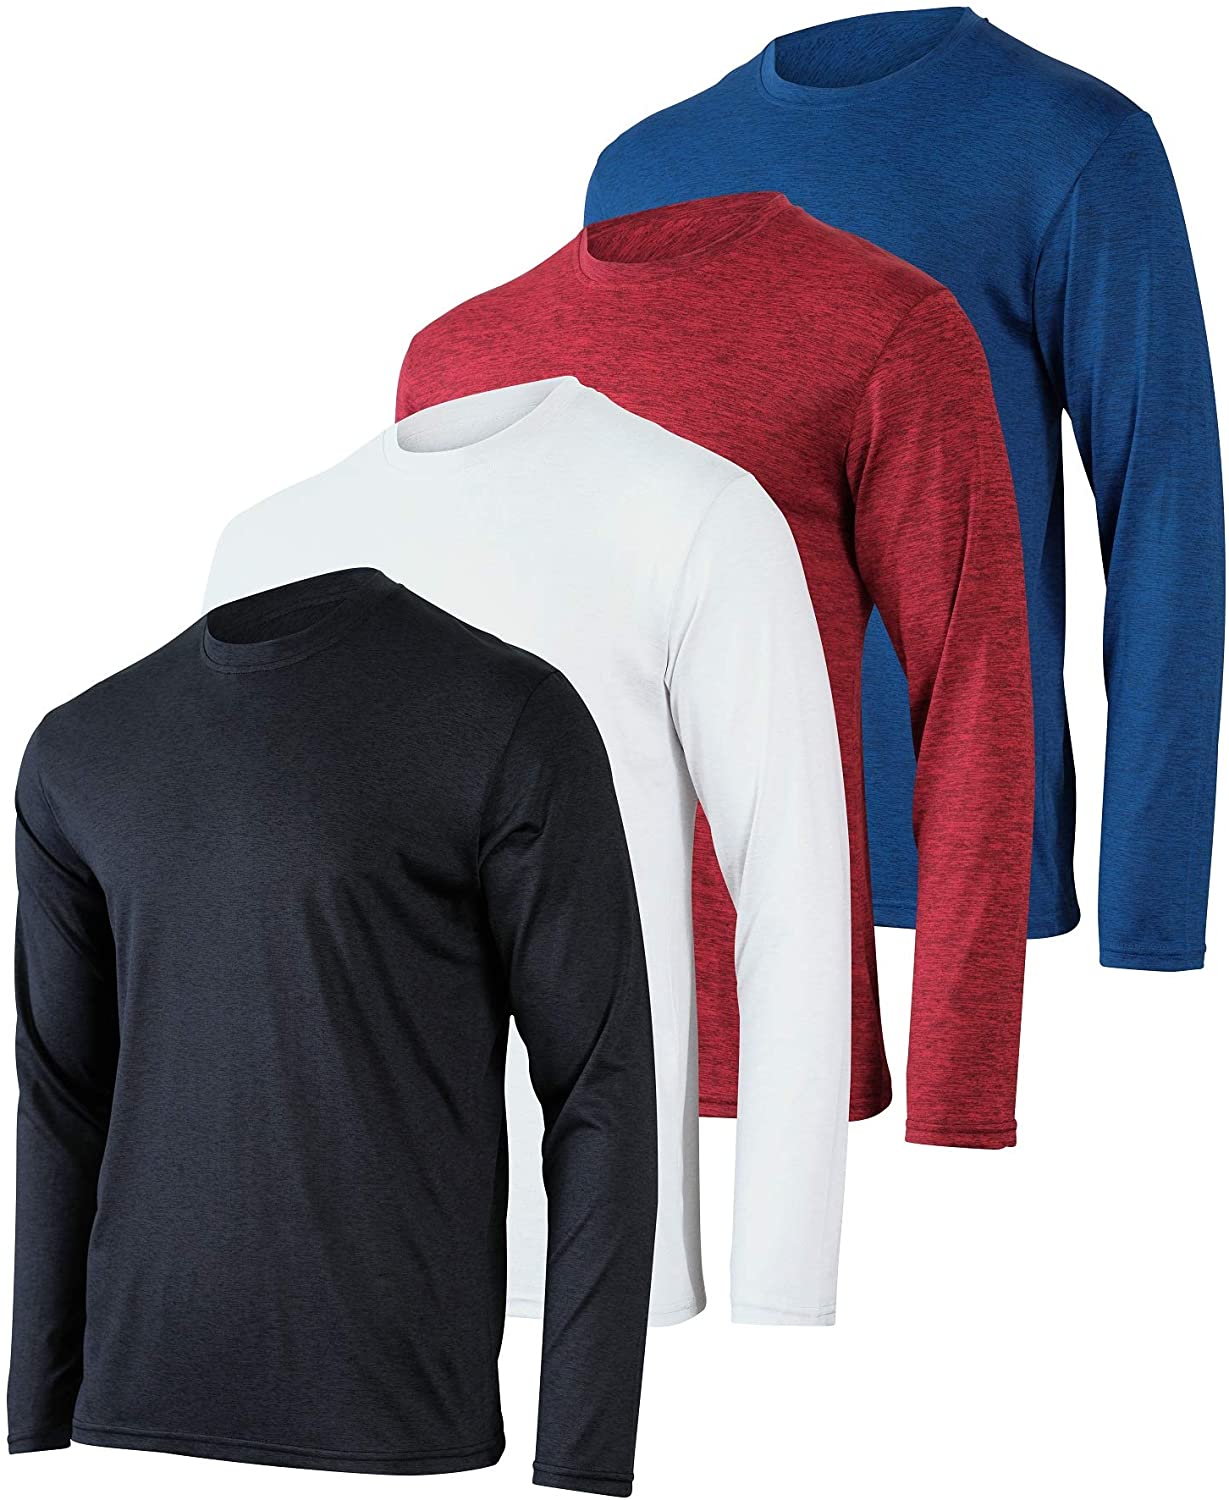 Sports & Outdoors, Breathable fishing shirts long sleeve WholeSale